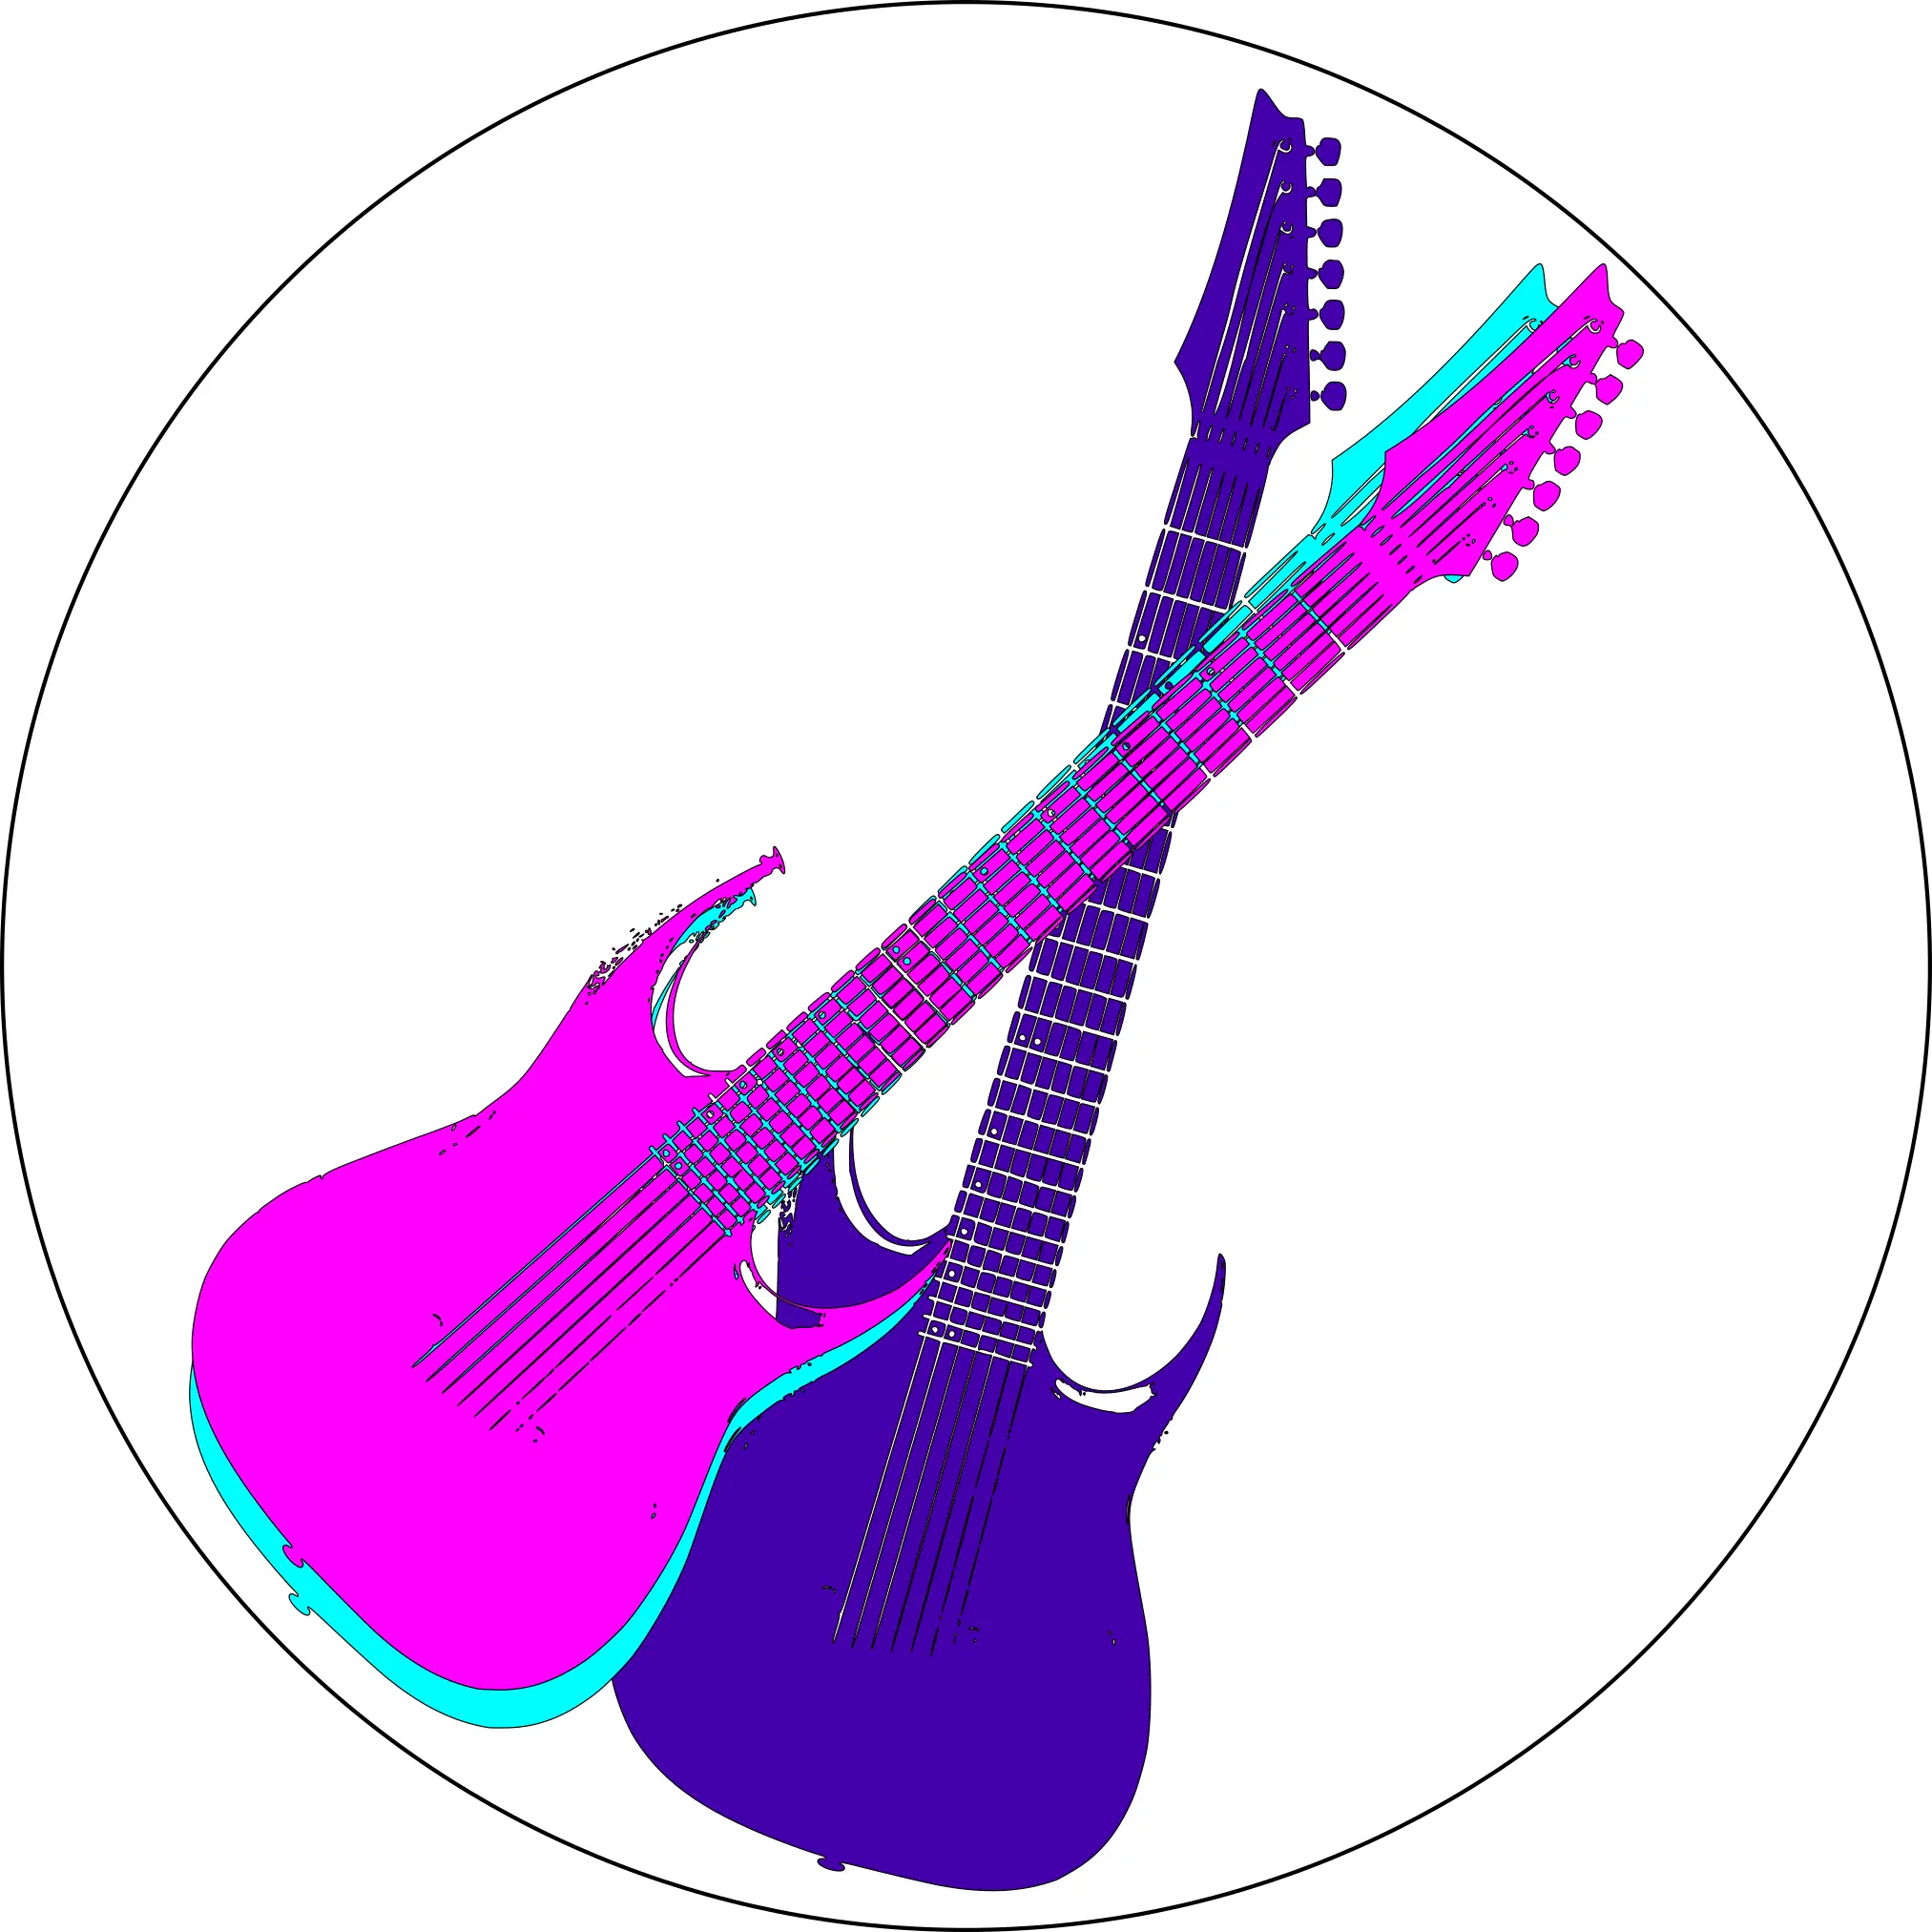 freemusicdemixer-logo